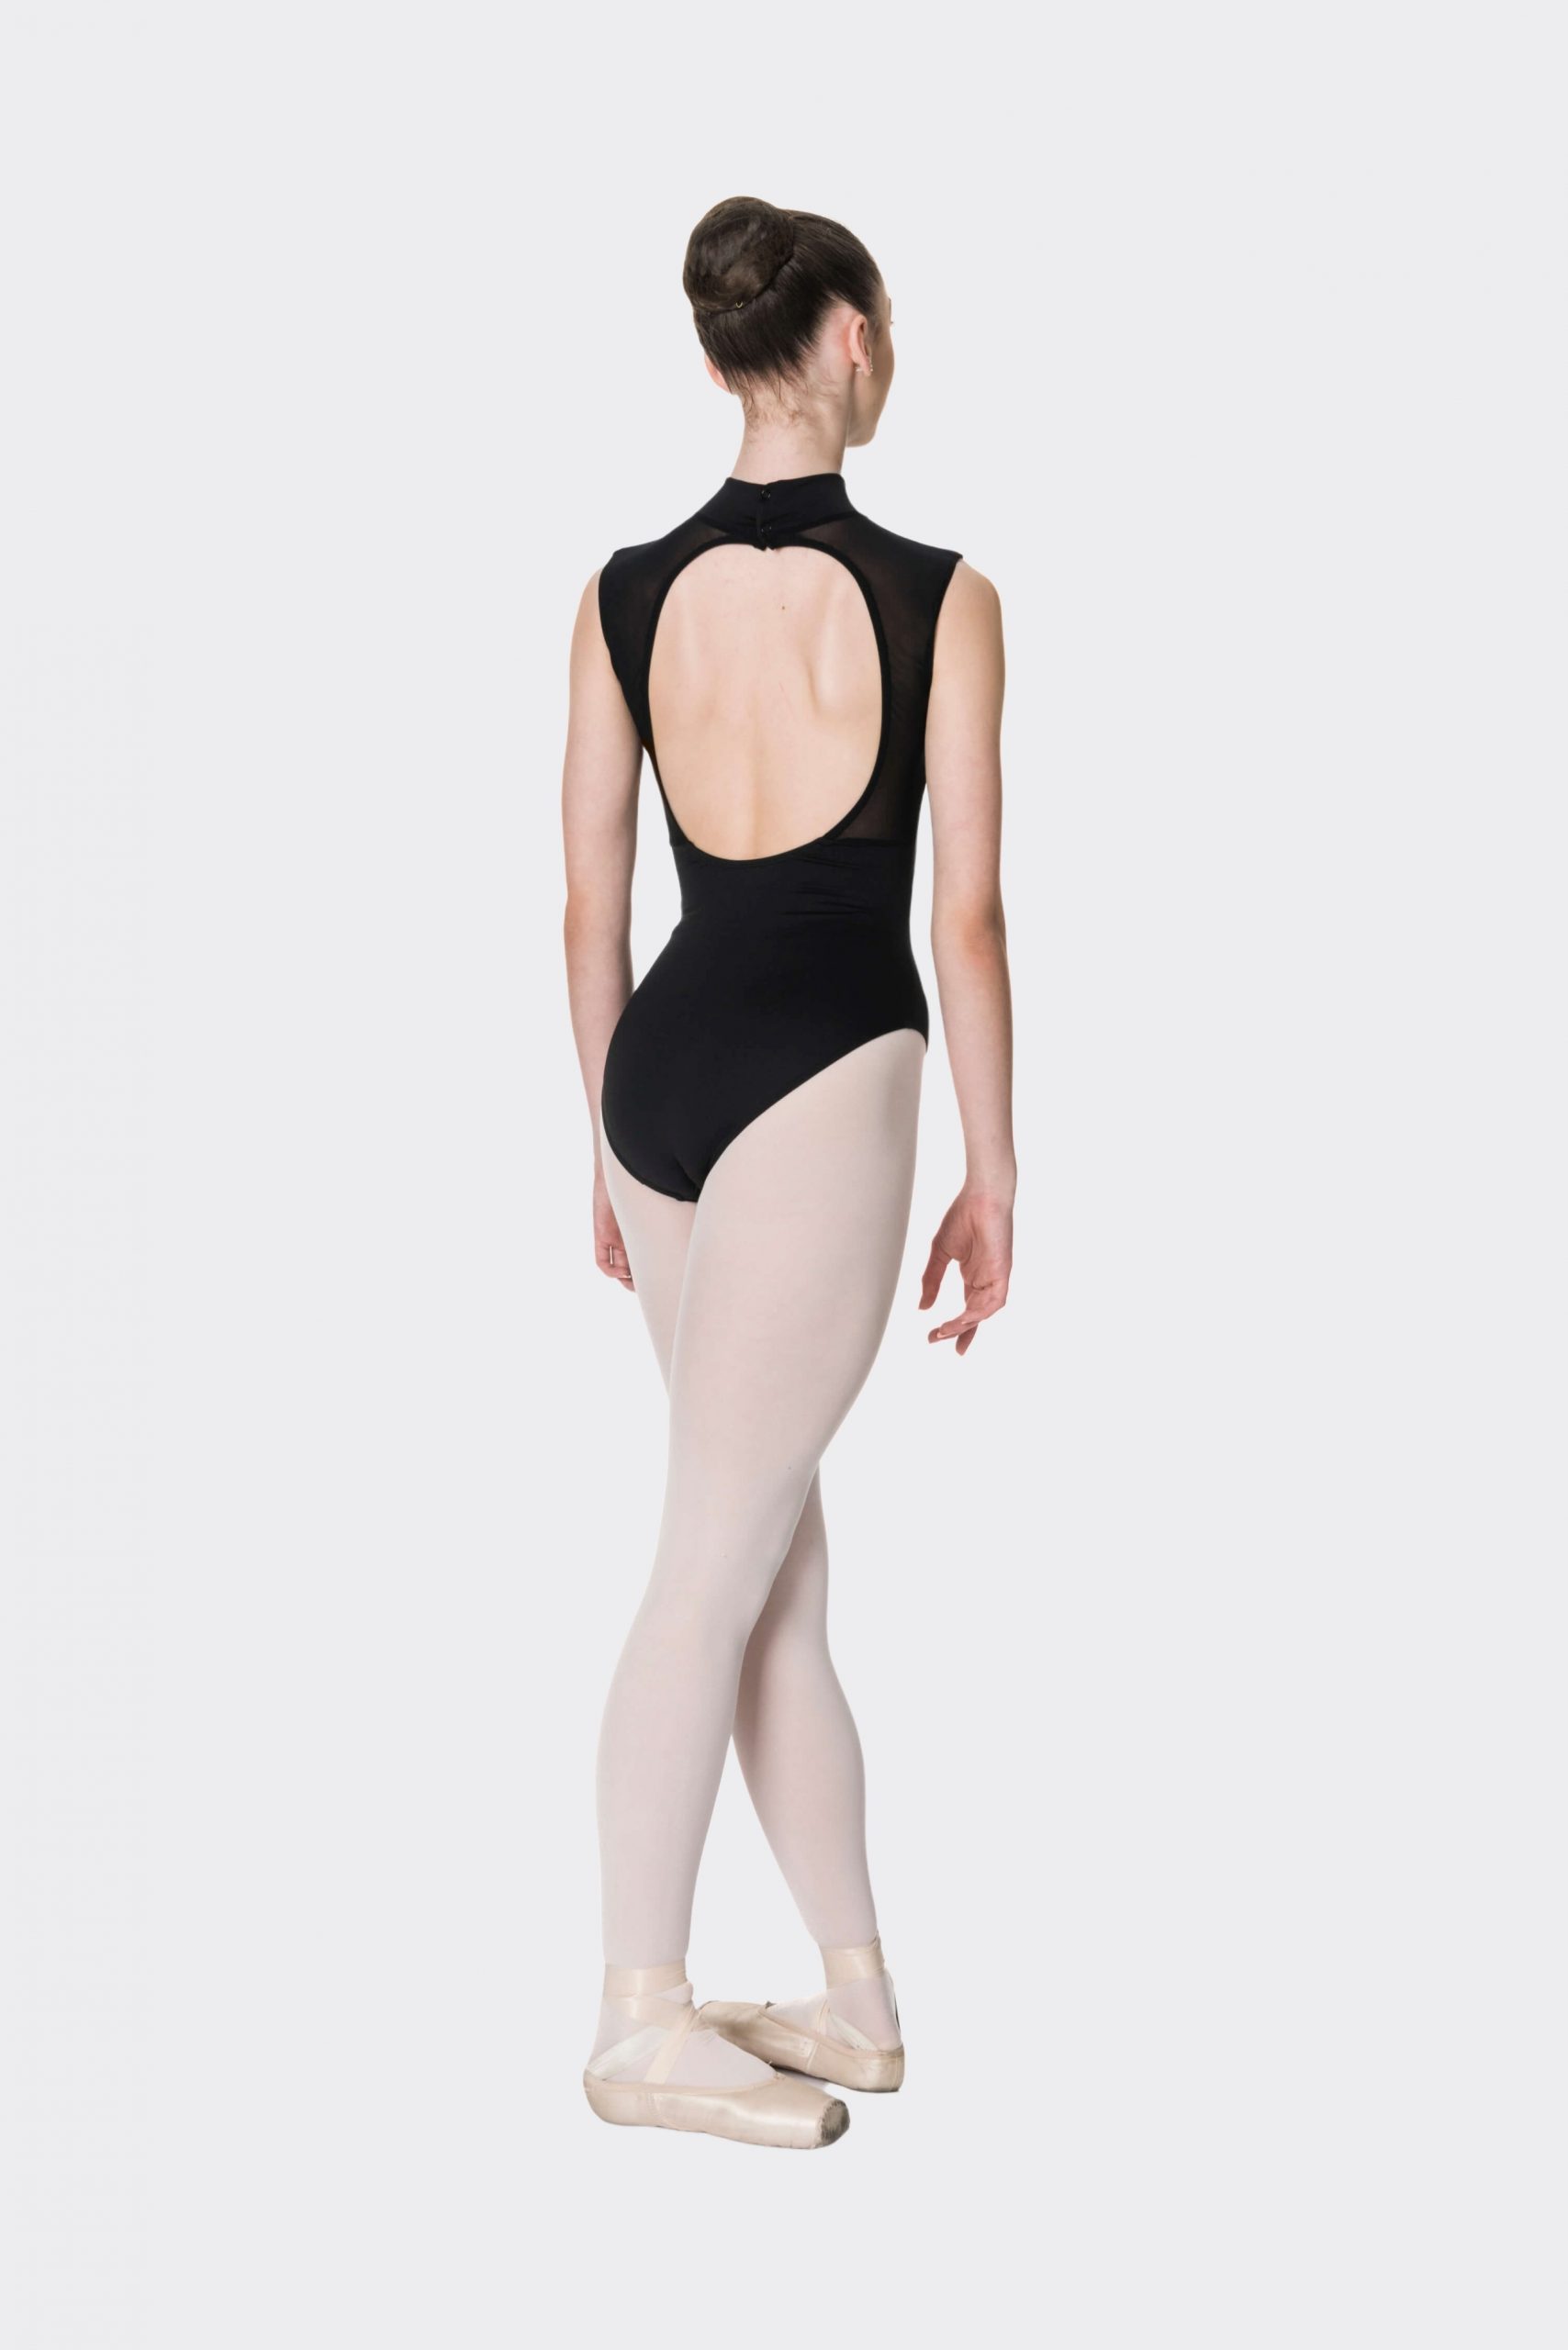 Zara Leotard - Studio 7 Dancewear 